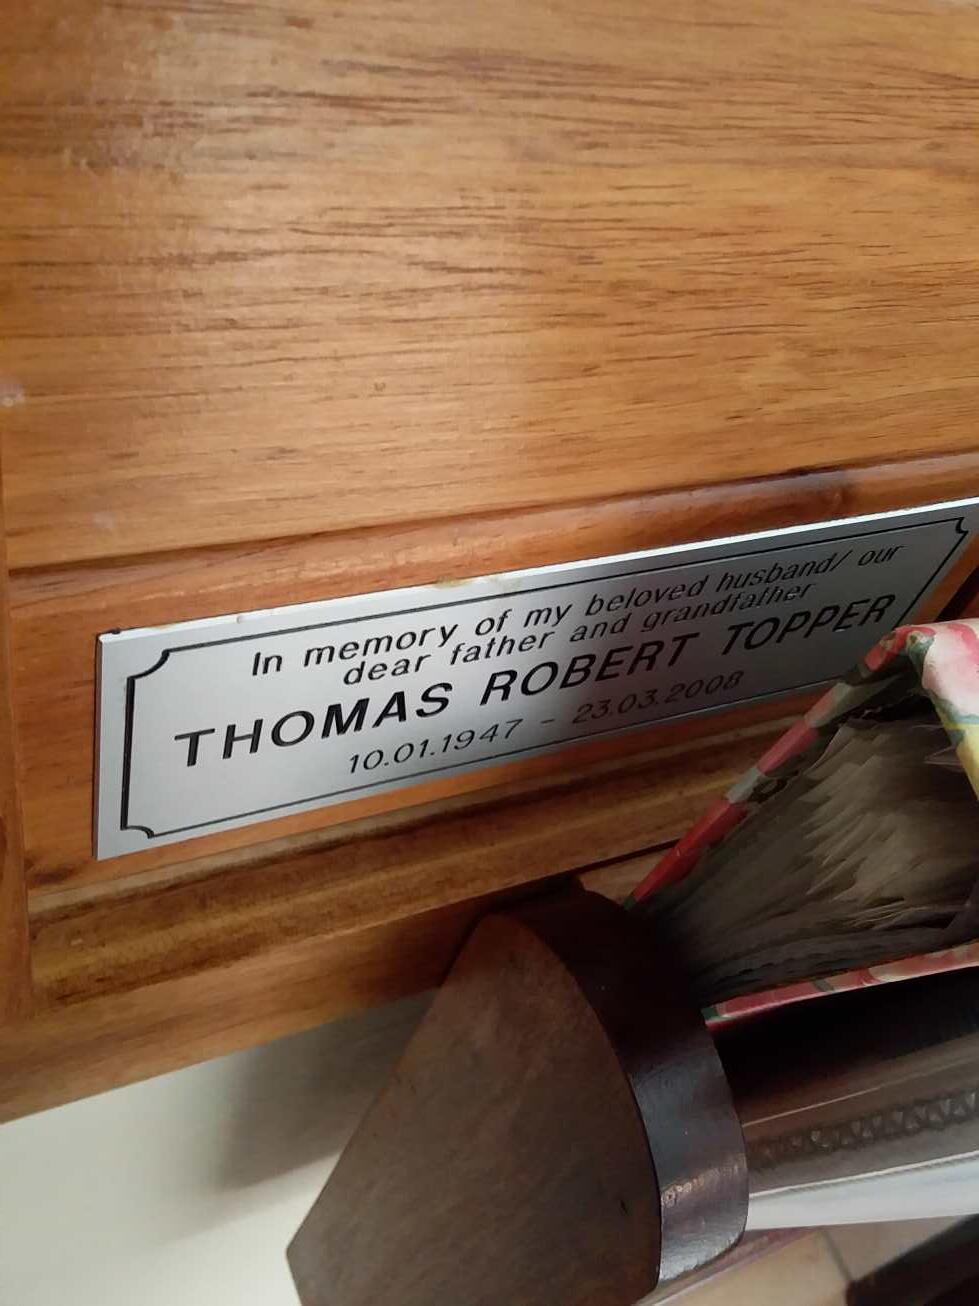 TOPPER Thomas Robert 1947-2008